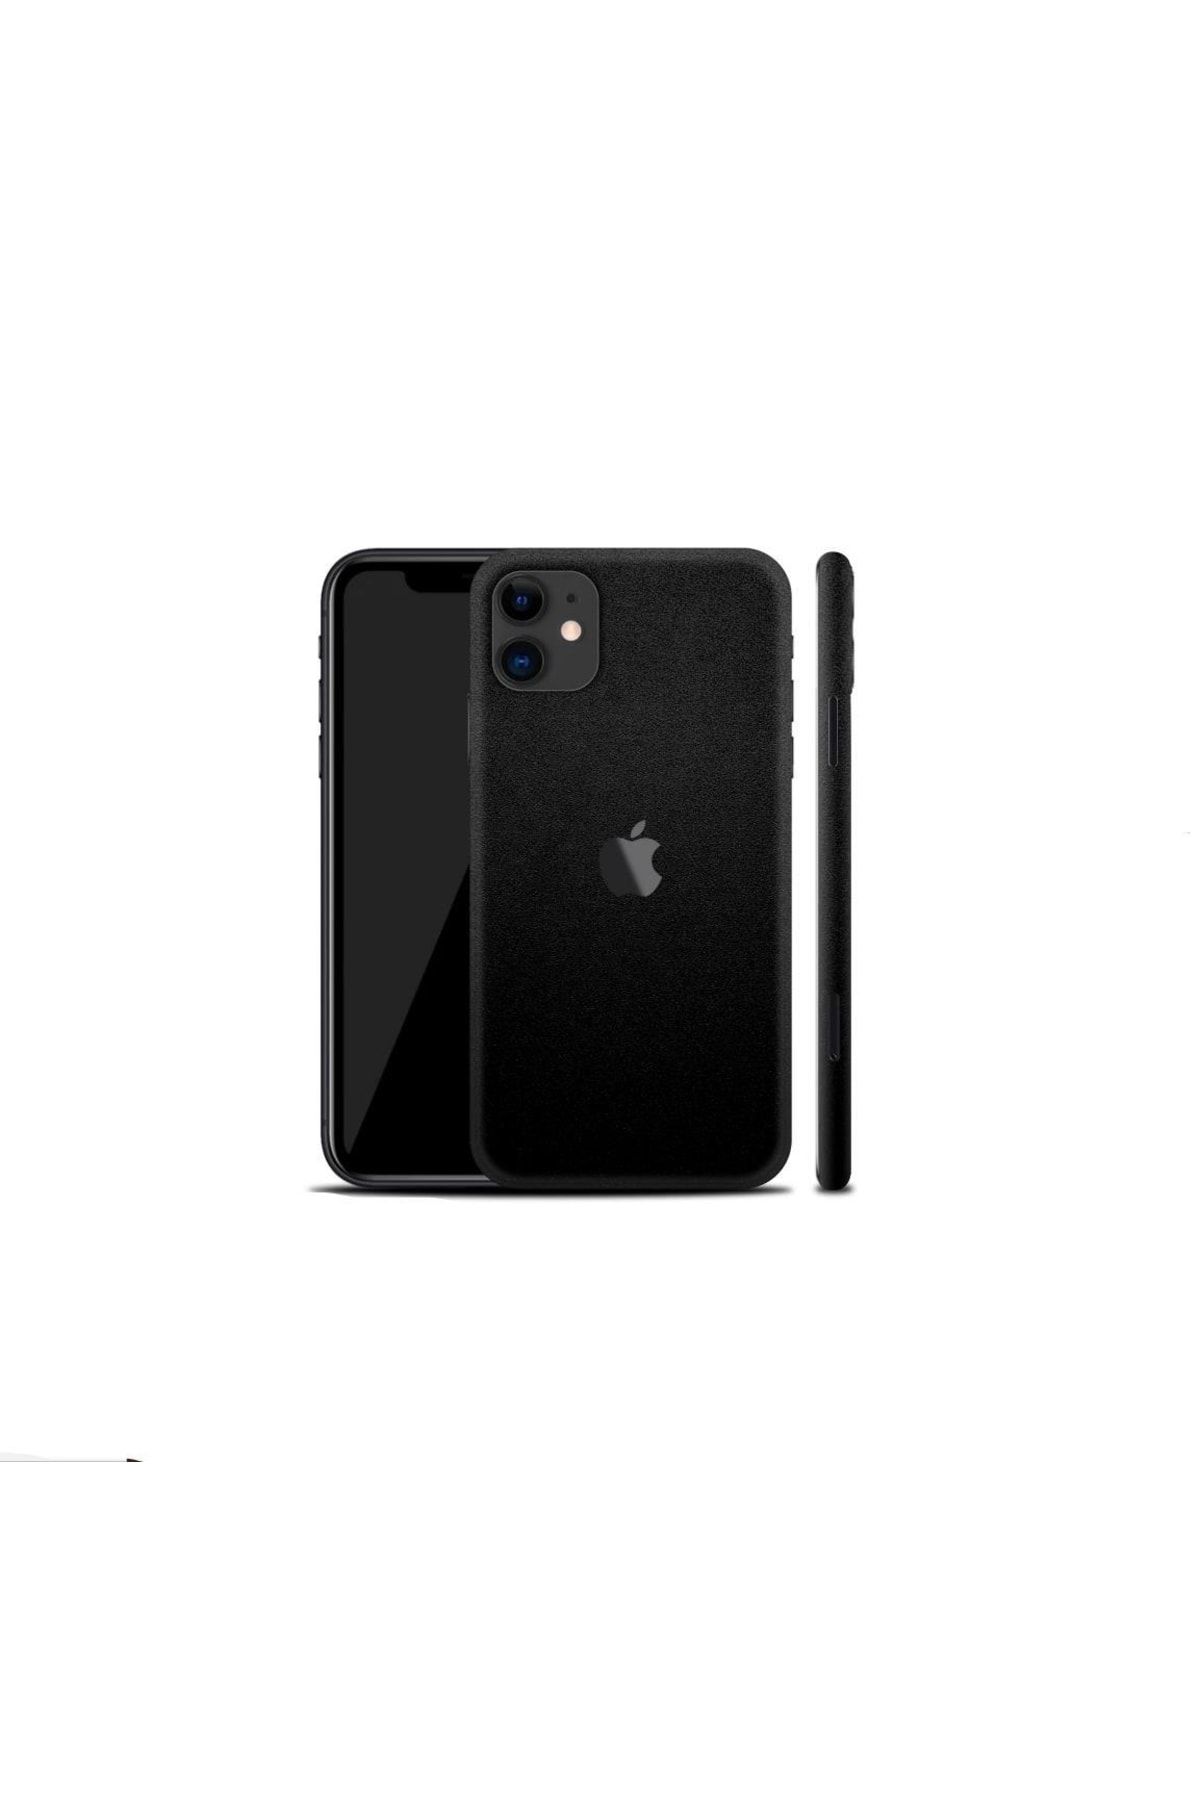 Ecr Mobile Iphone 11 Mat Siyah Arka Kaplama Uyumlu